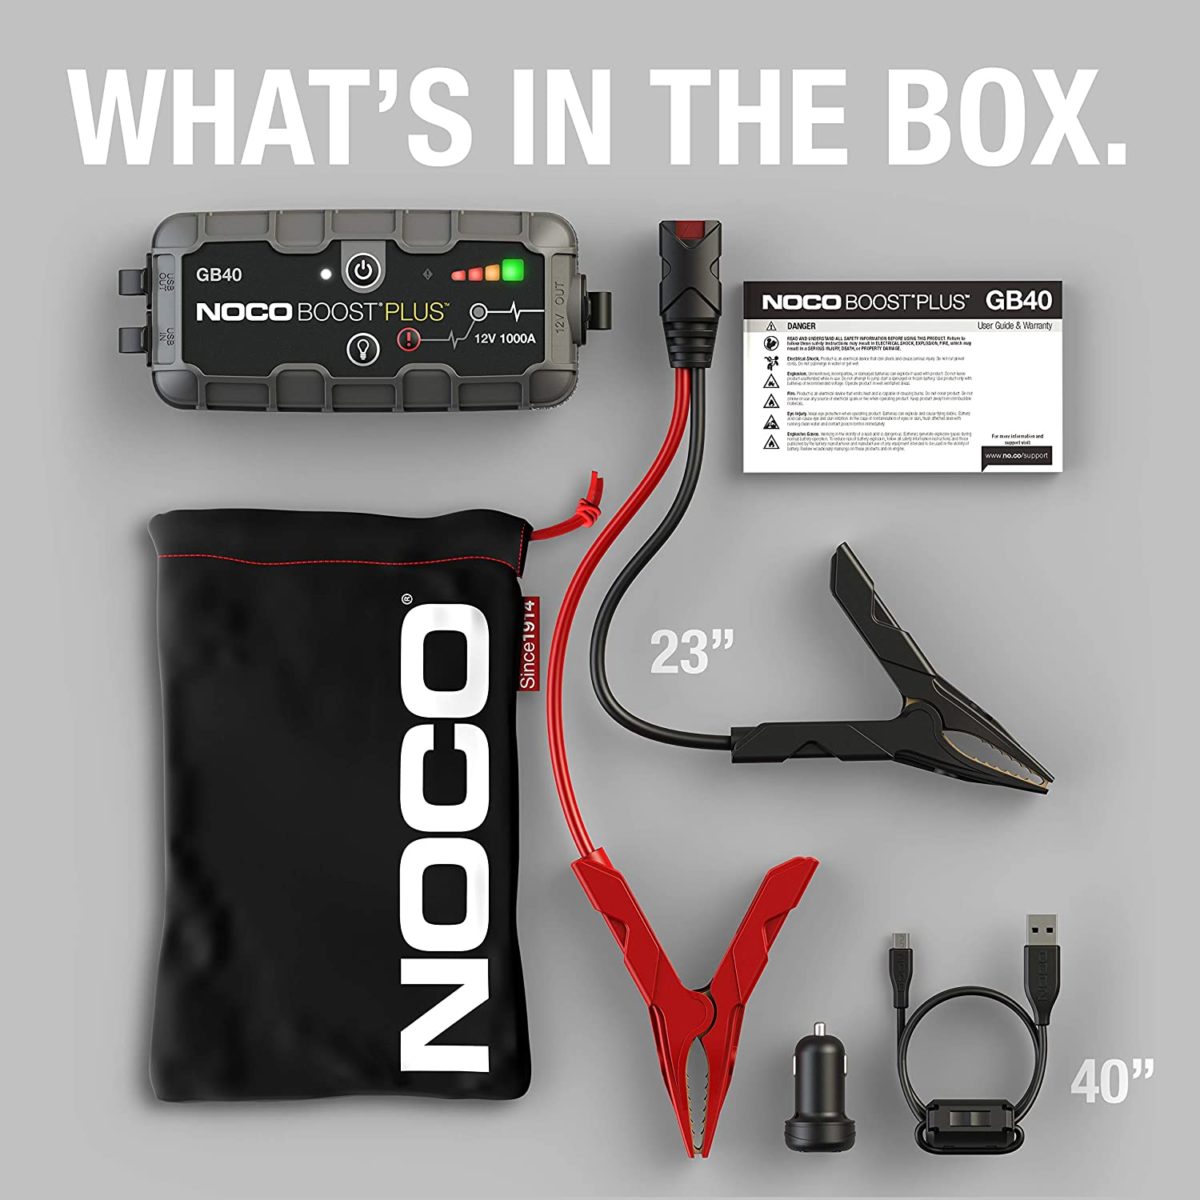 NOCO Boost Plus GB40 Jump Starter Power Pack